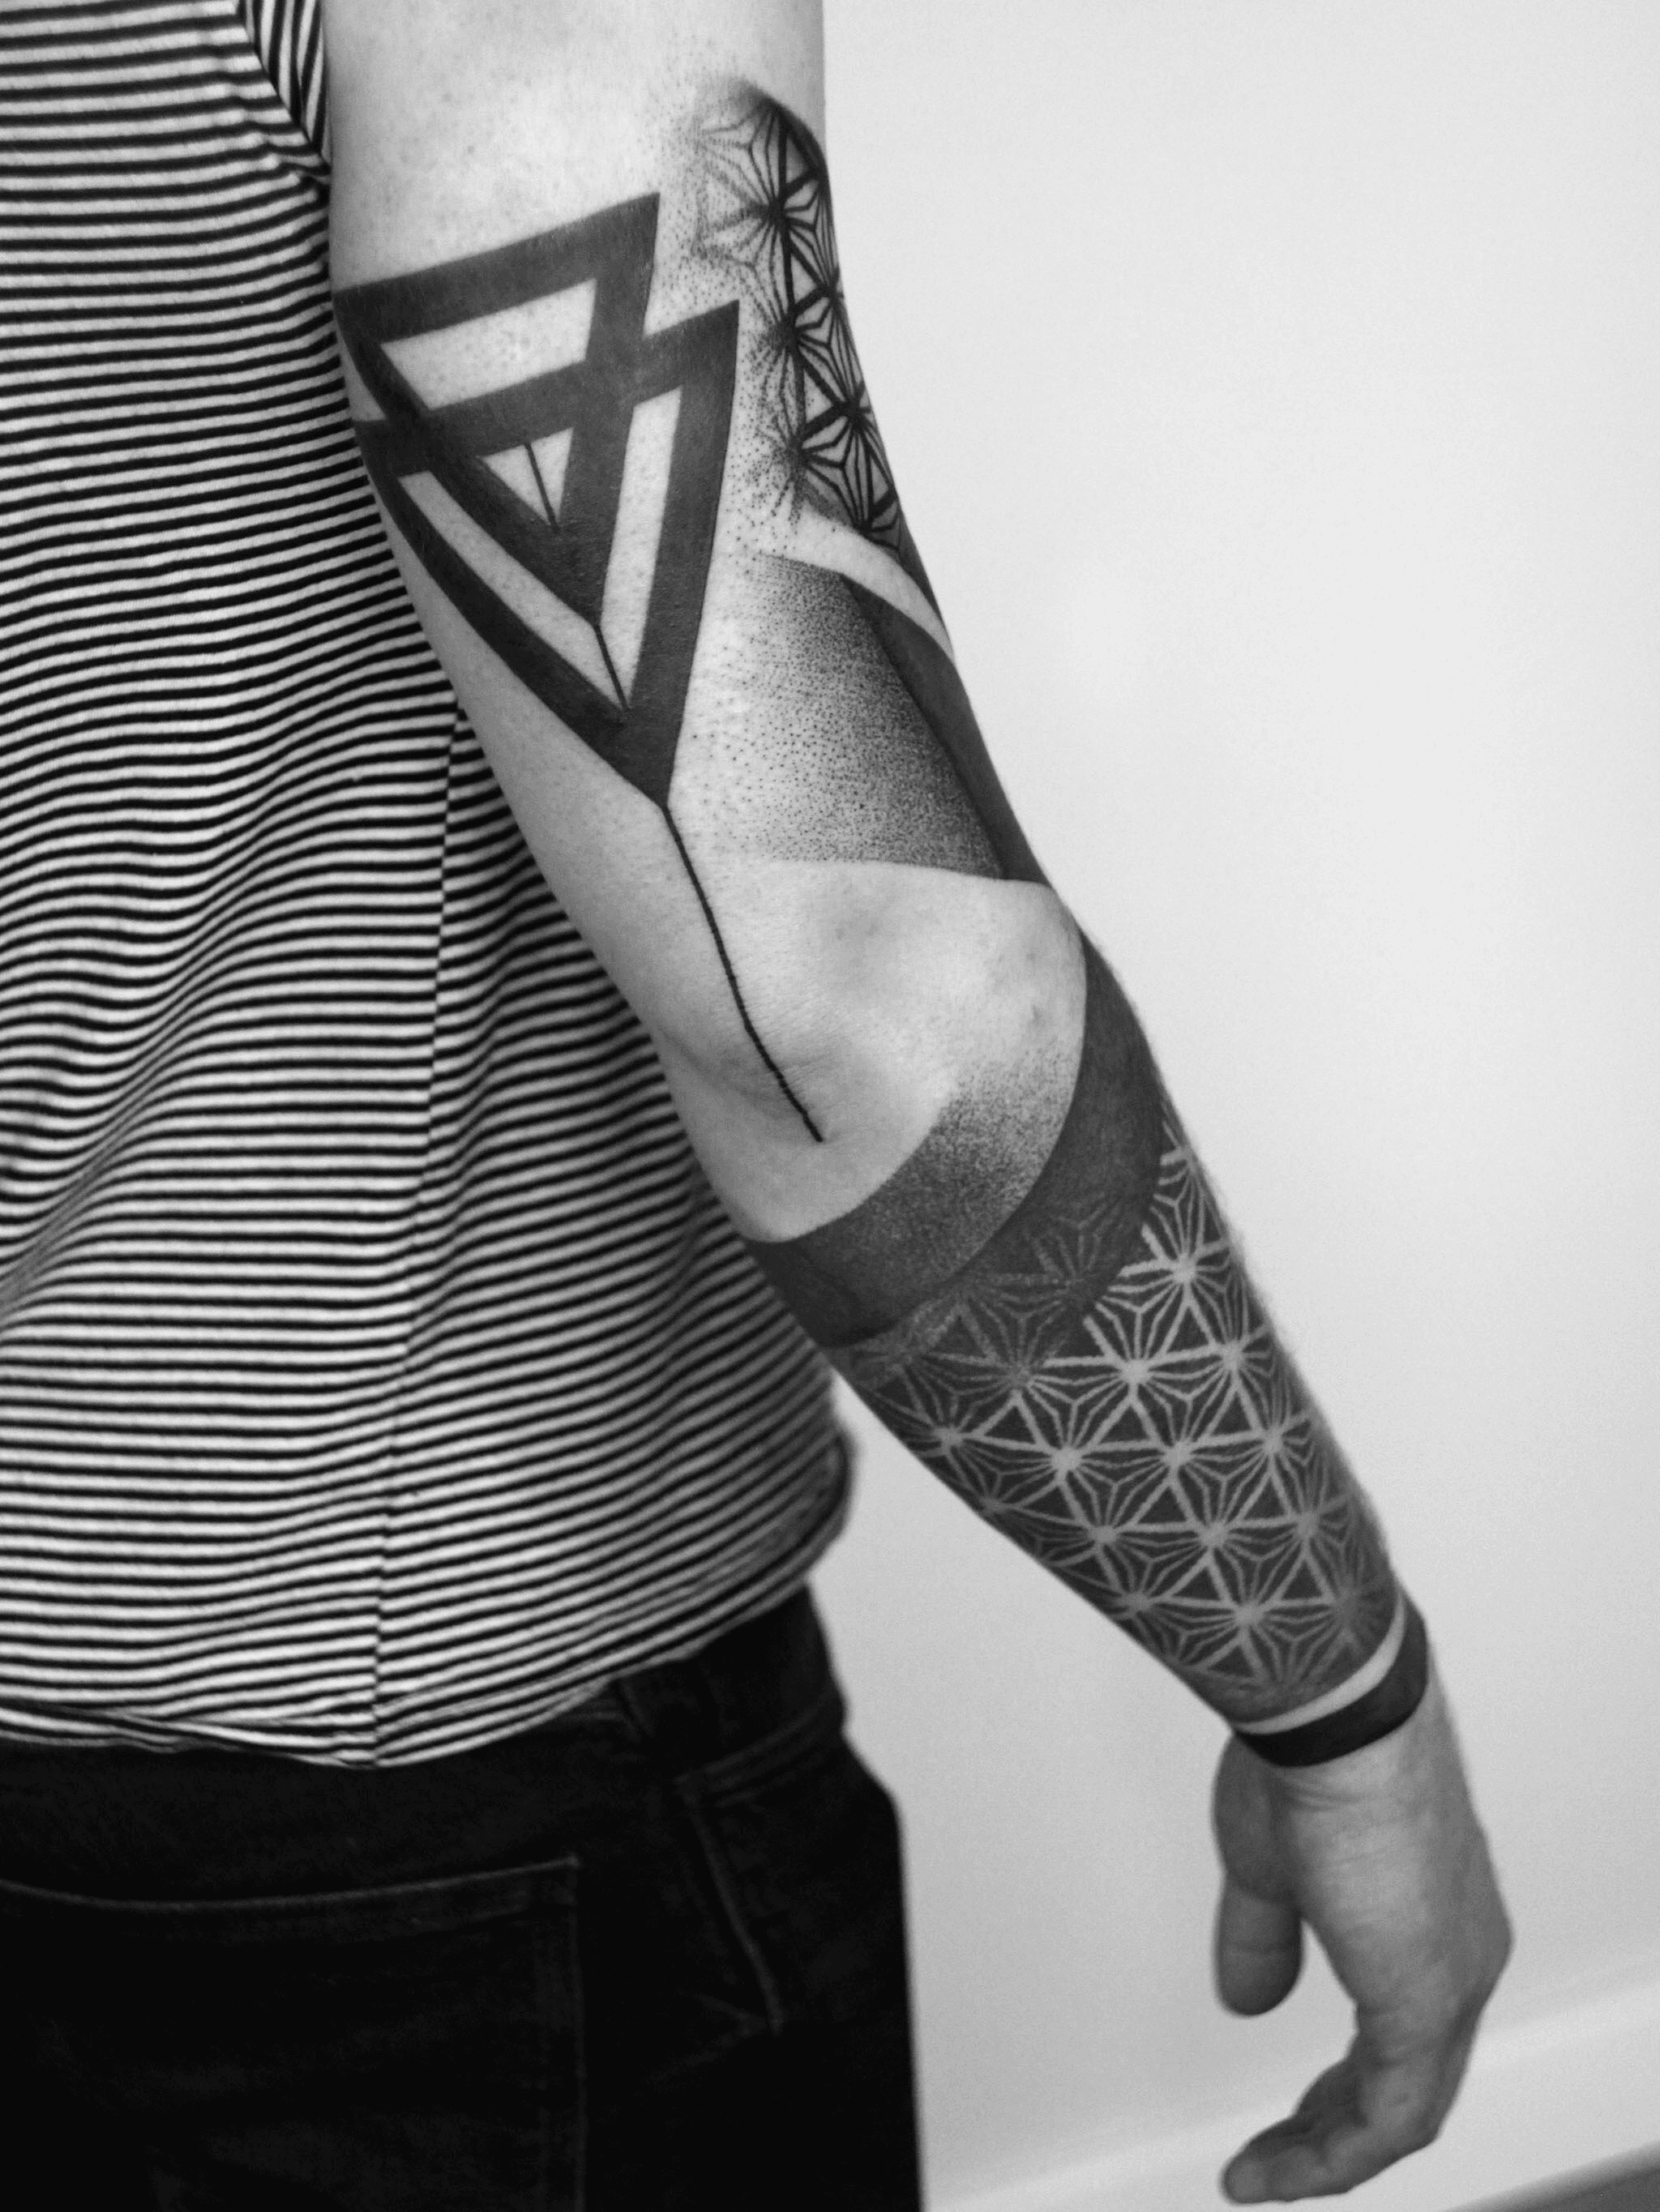 111 Top Rated Geometric Tattoo Designs  Iron Buzz Tattoos